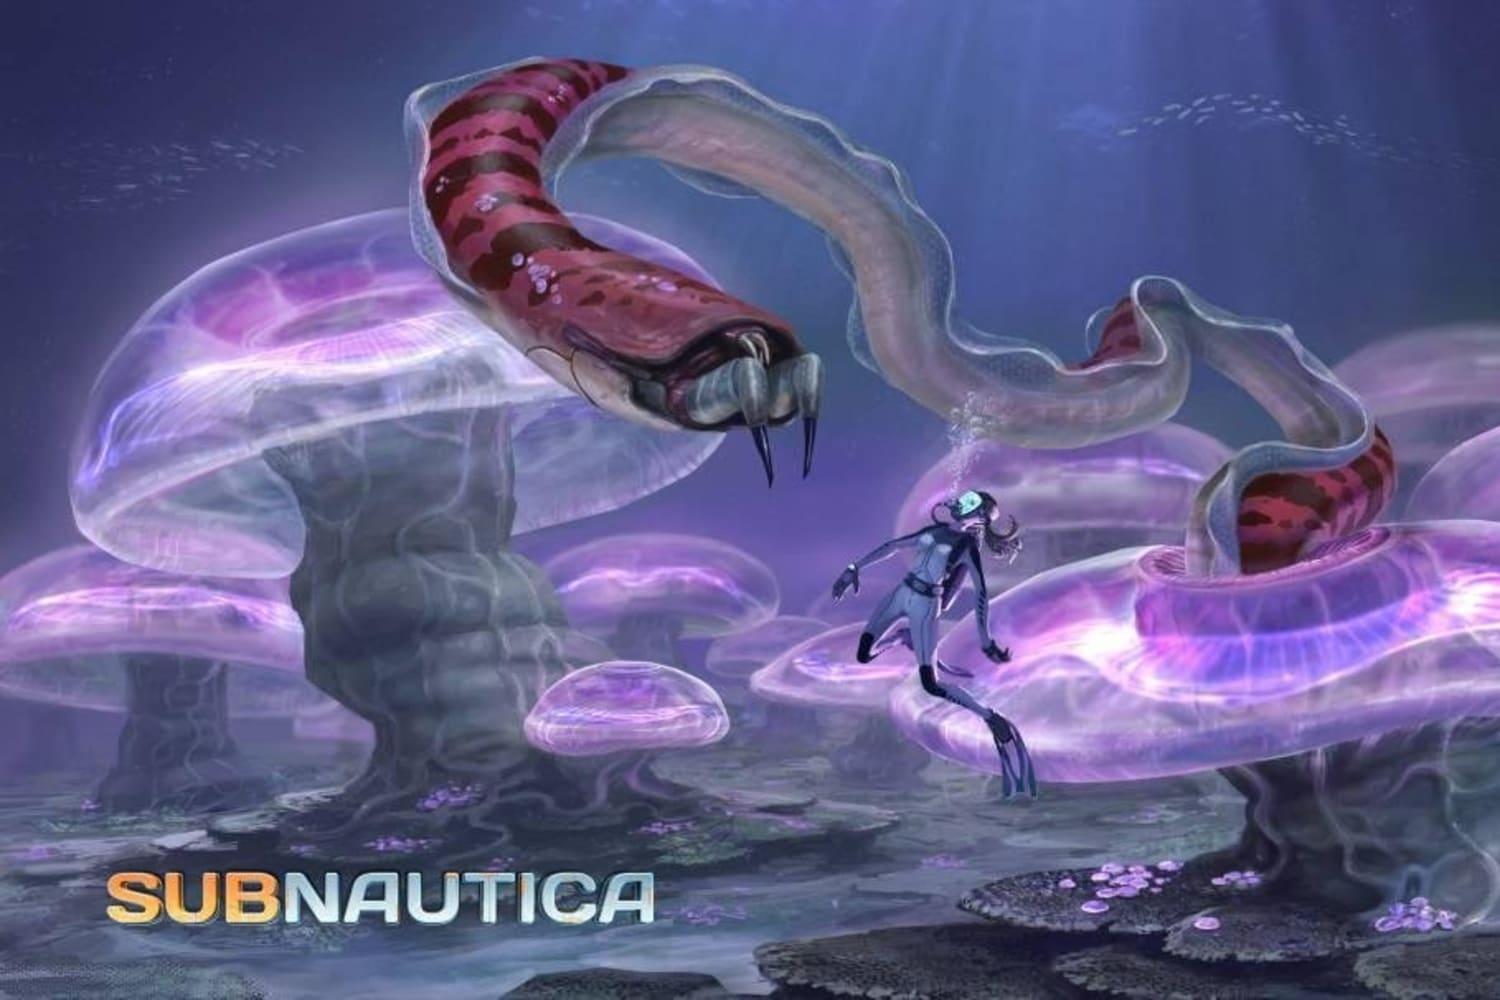 subnautica free download pc game